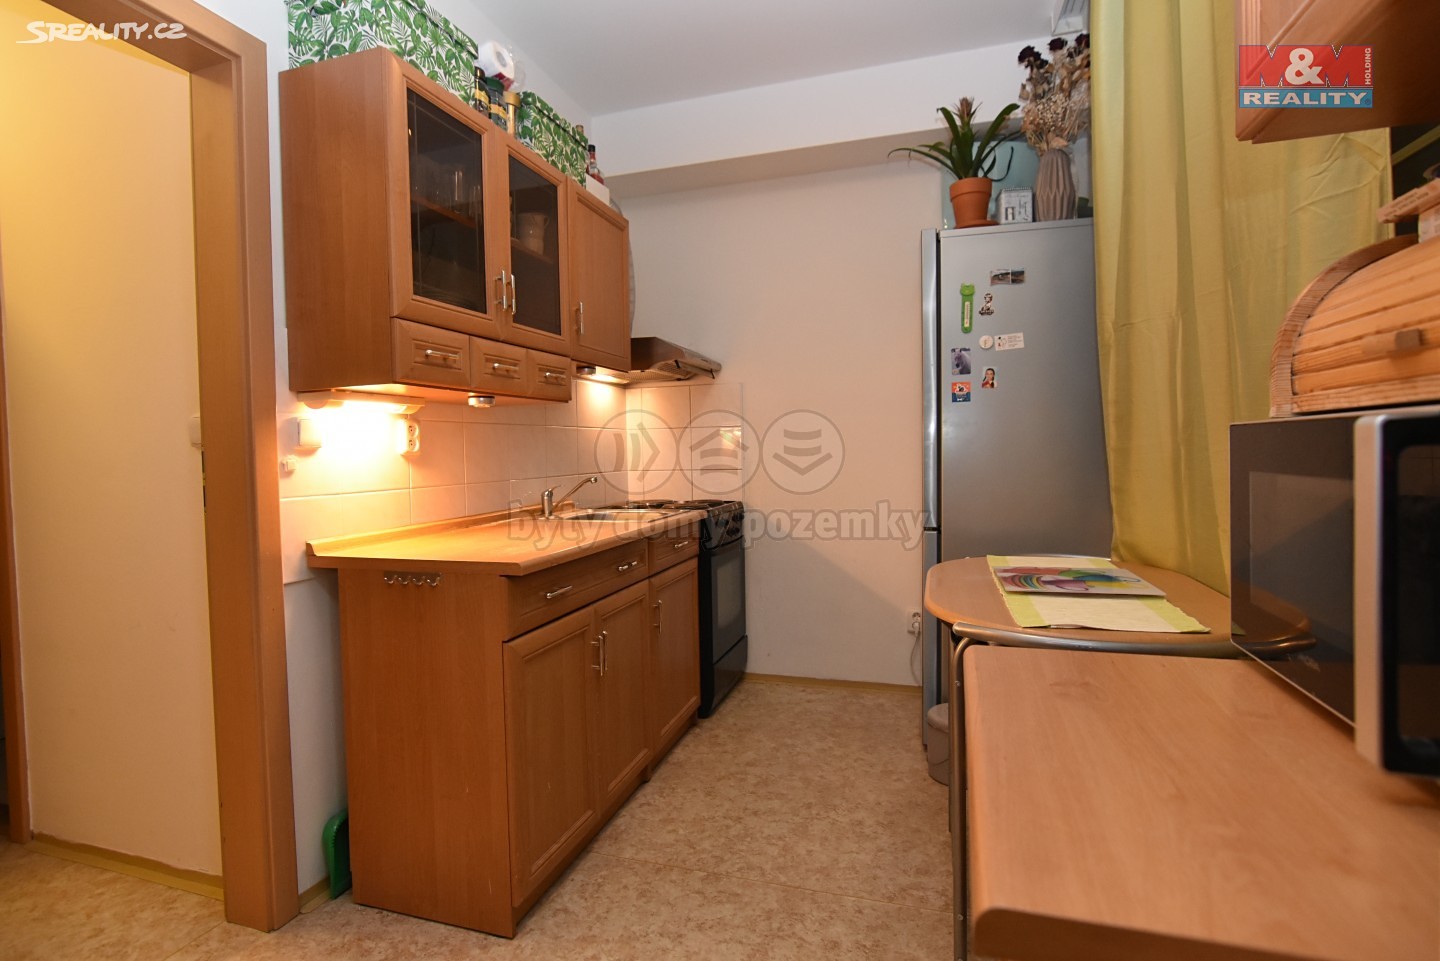 Pronájem bytu 1+kk 35 m², Pastelová, Liberec - Liberec VI-Rochlice